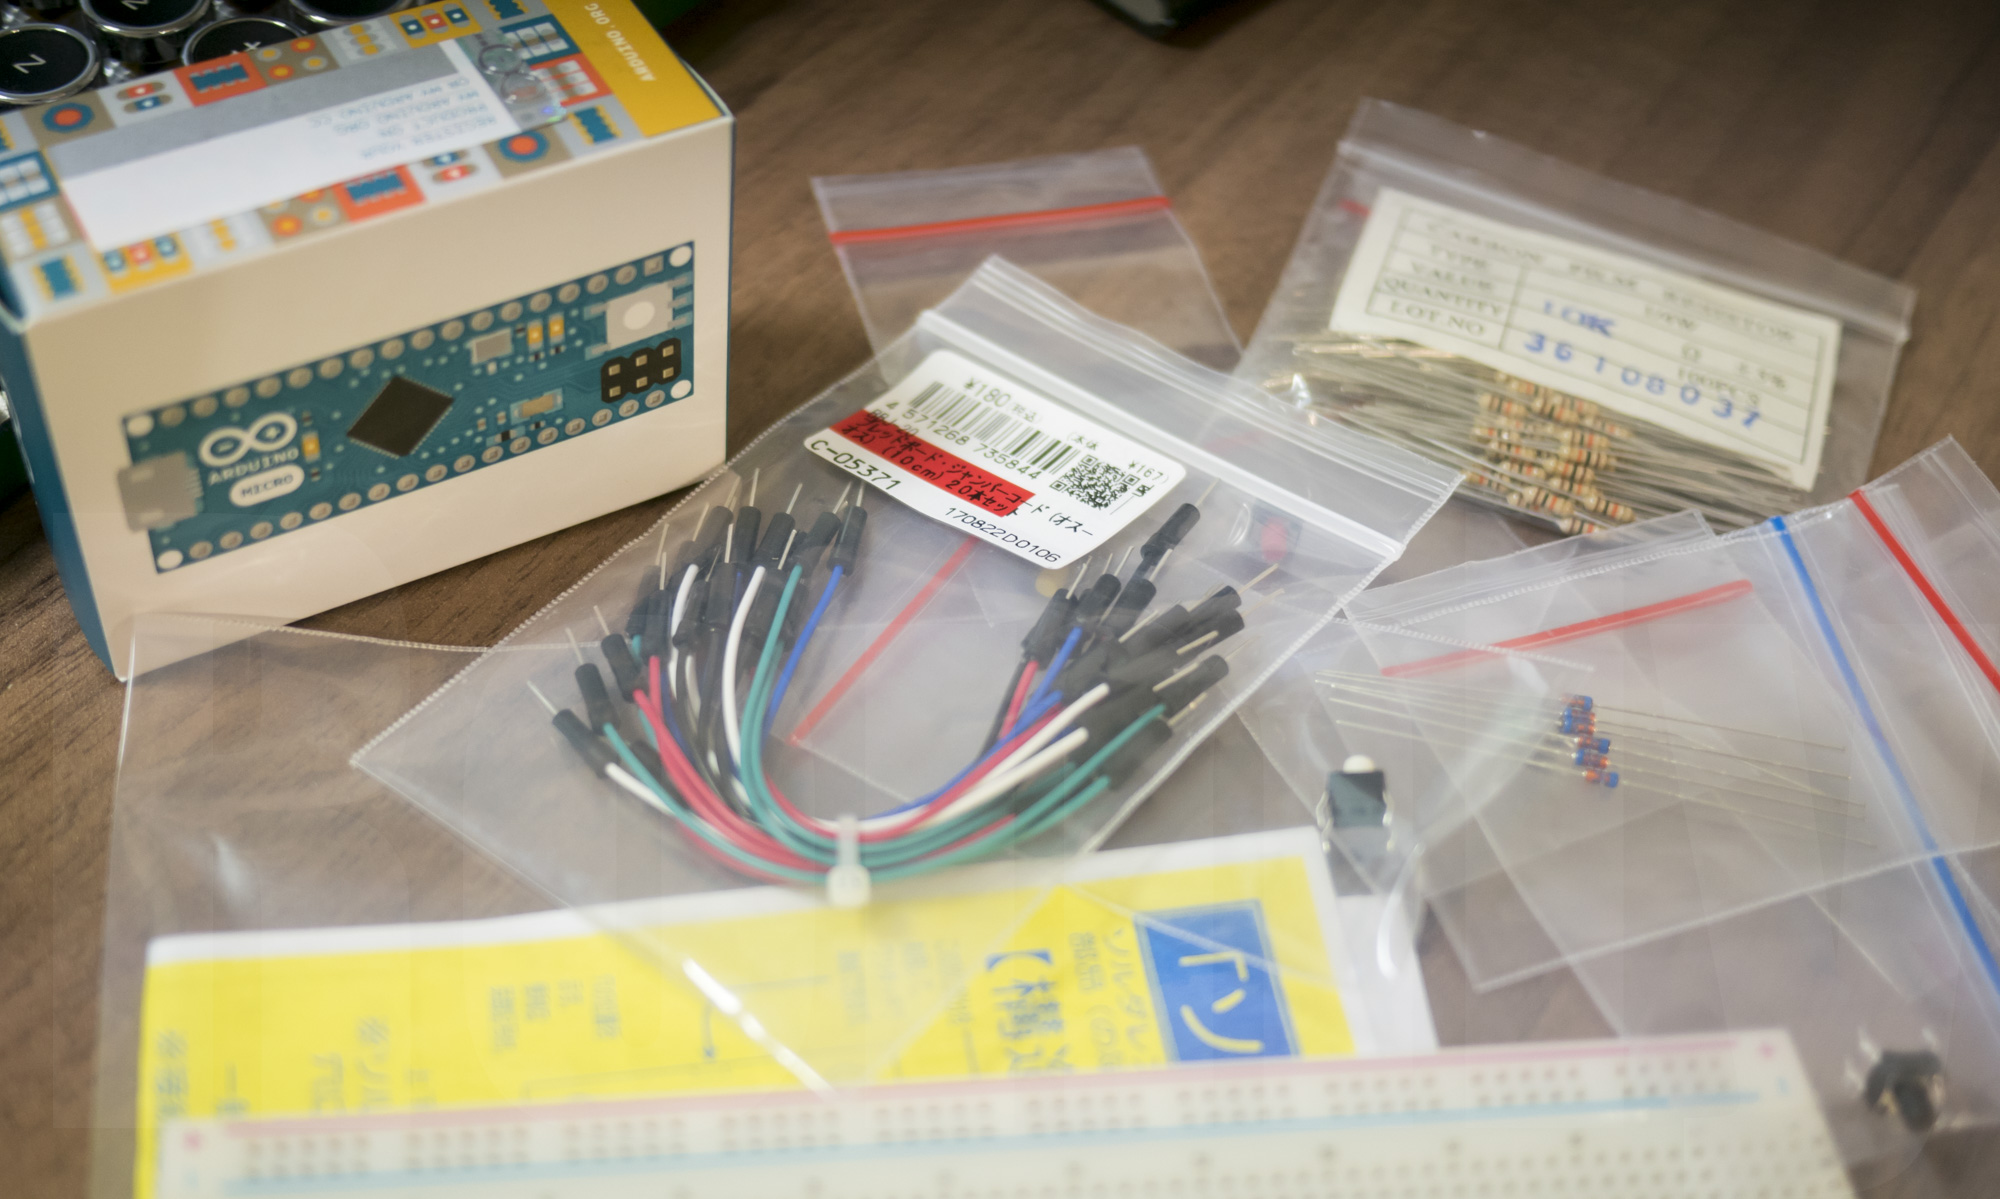 Materials for starting Arduino